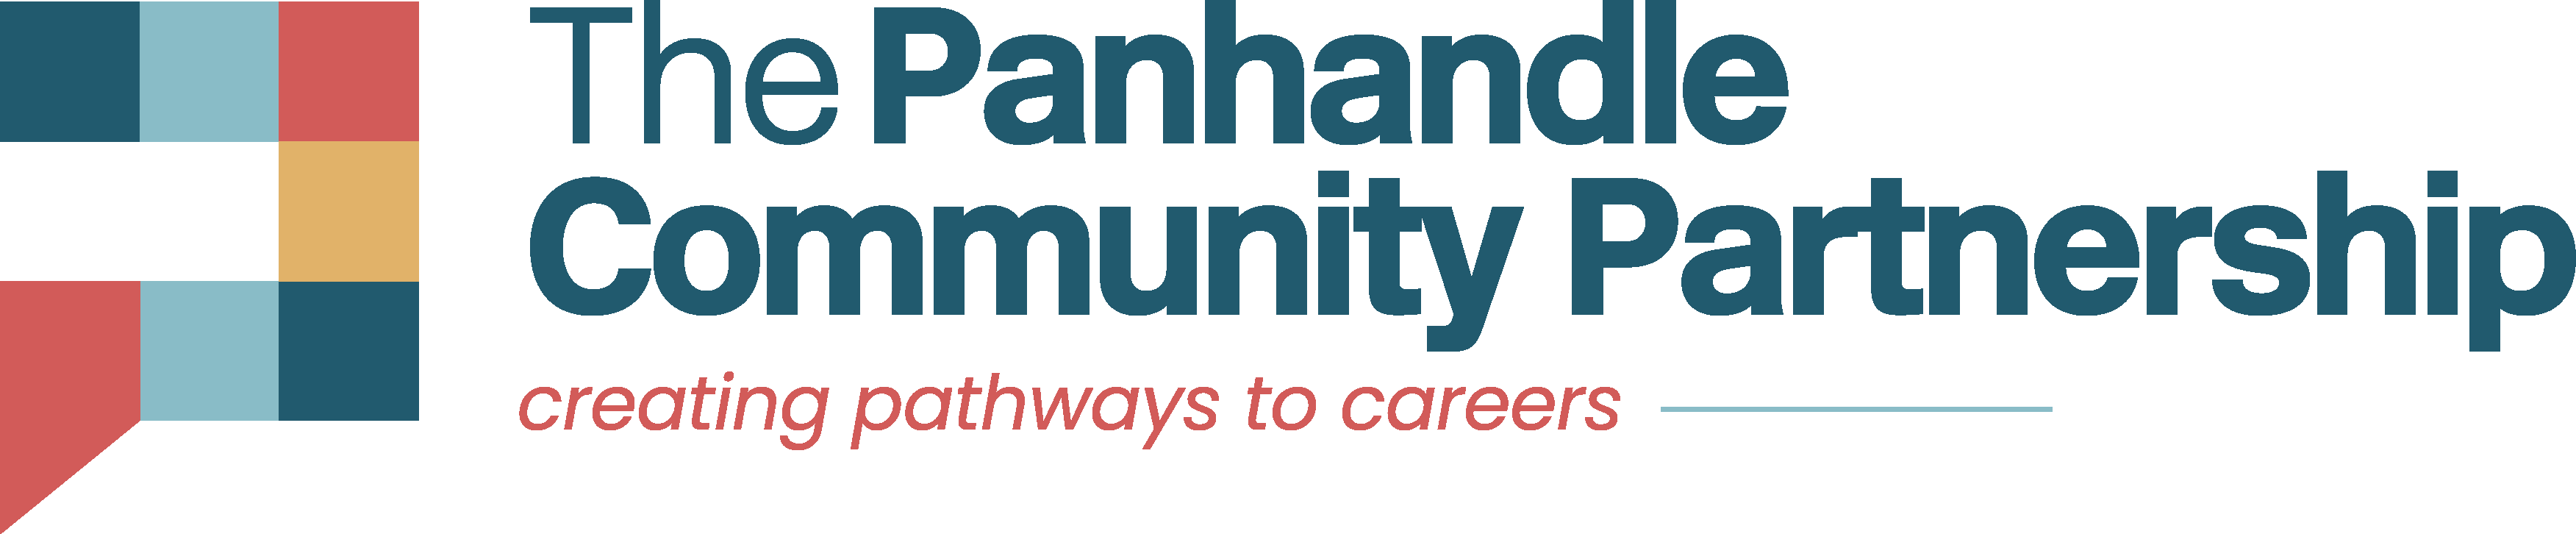 Panhandle Community Partnership